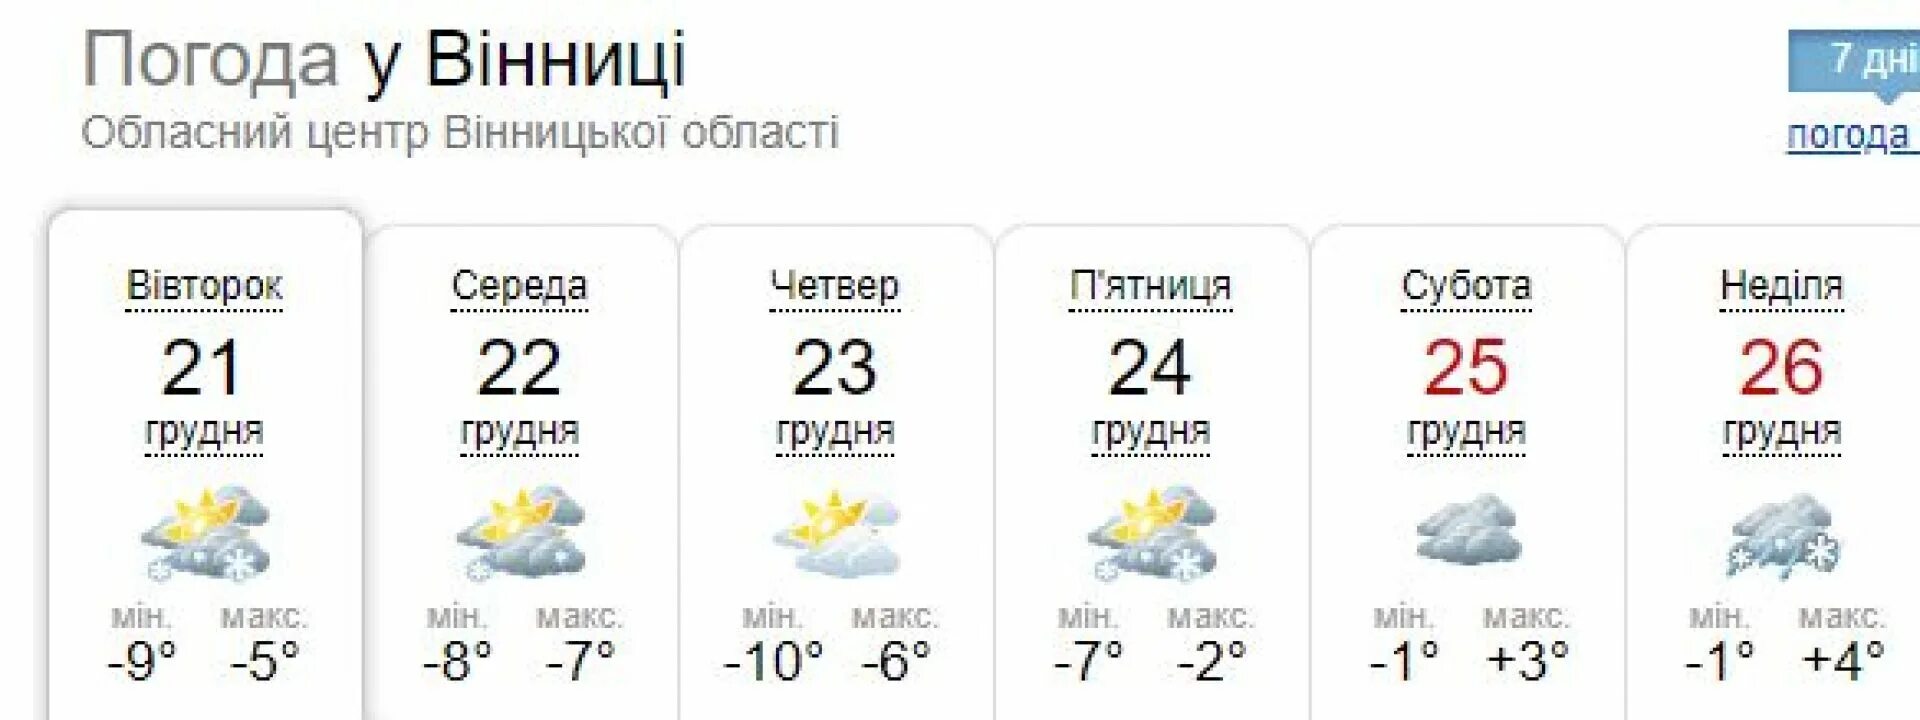 Погода в Харцызске. Синоптик Харцызск. Погода в Чернигове. Погода Харцызск синоптик. Прогноз погоды на 1 июня